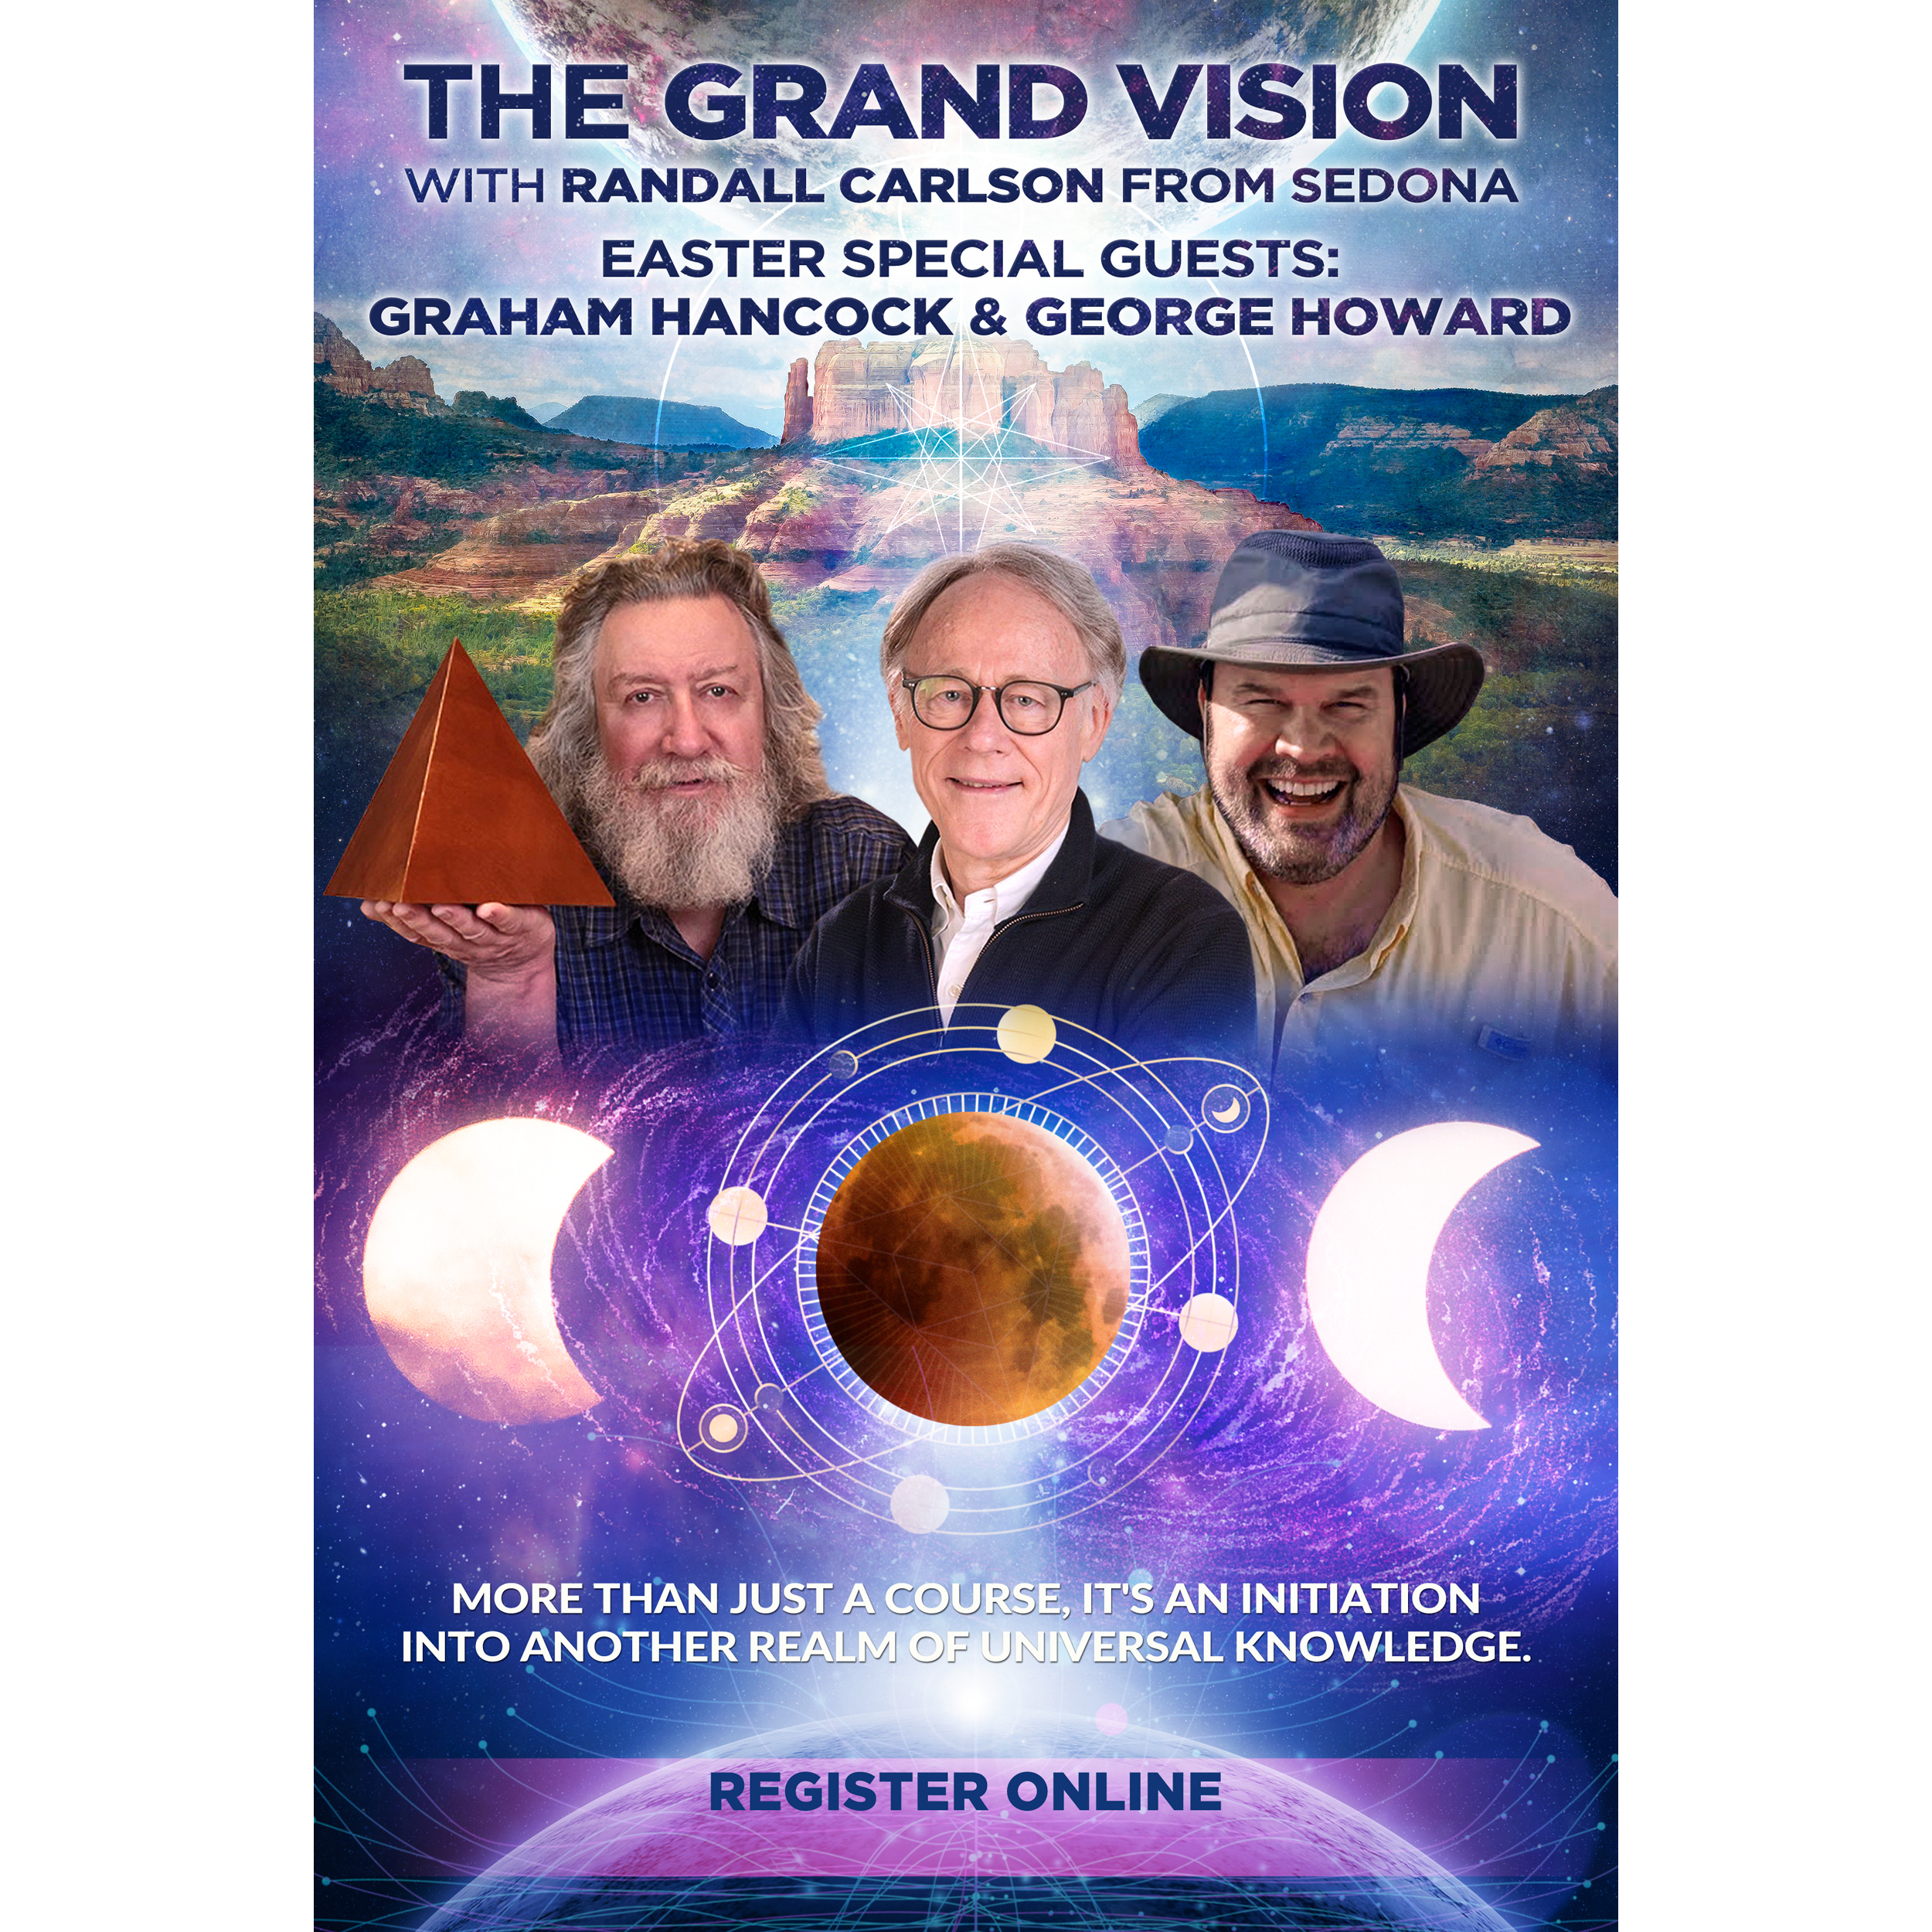 Easter VIP Randall Carlson & Graham Hancock Special Engagement in Sedona April 15-17, 2022